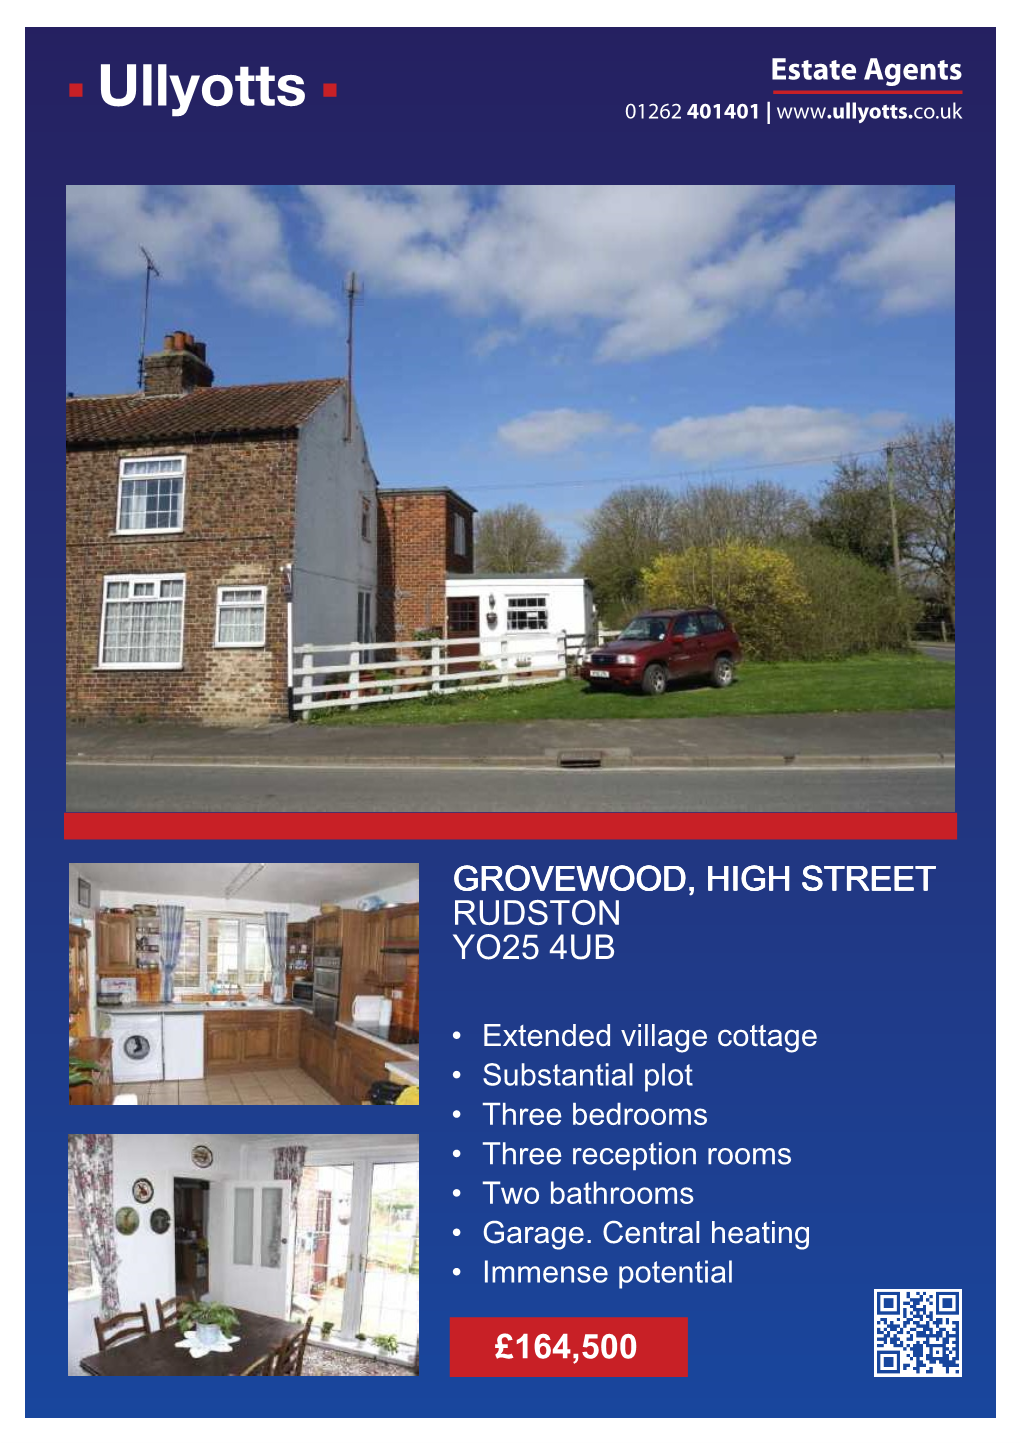 £164,500 Grovewood, High Street Rudston Yo25